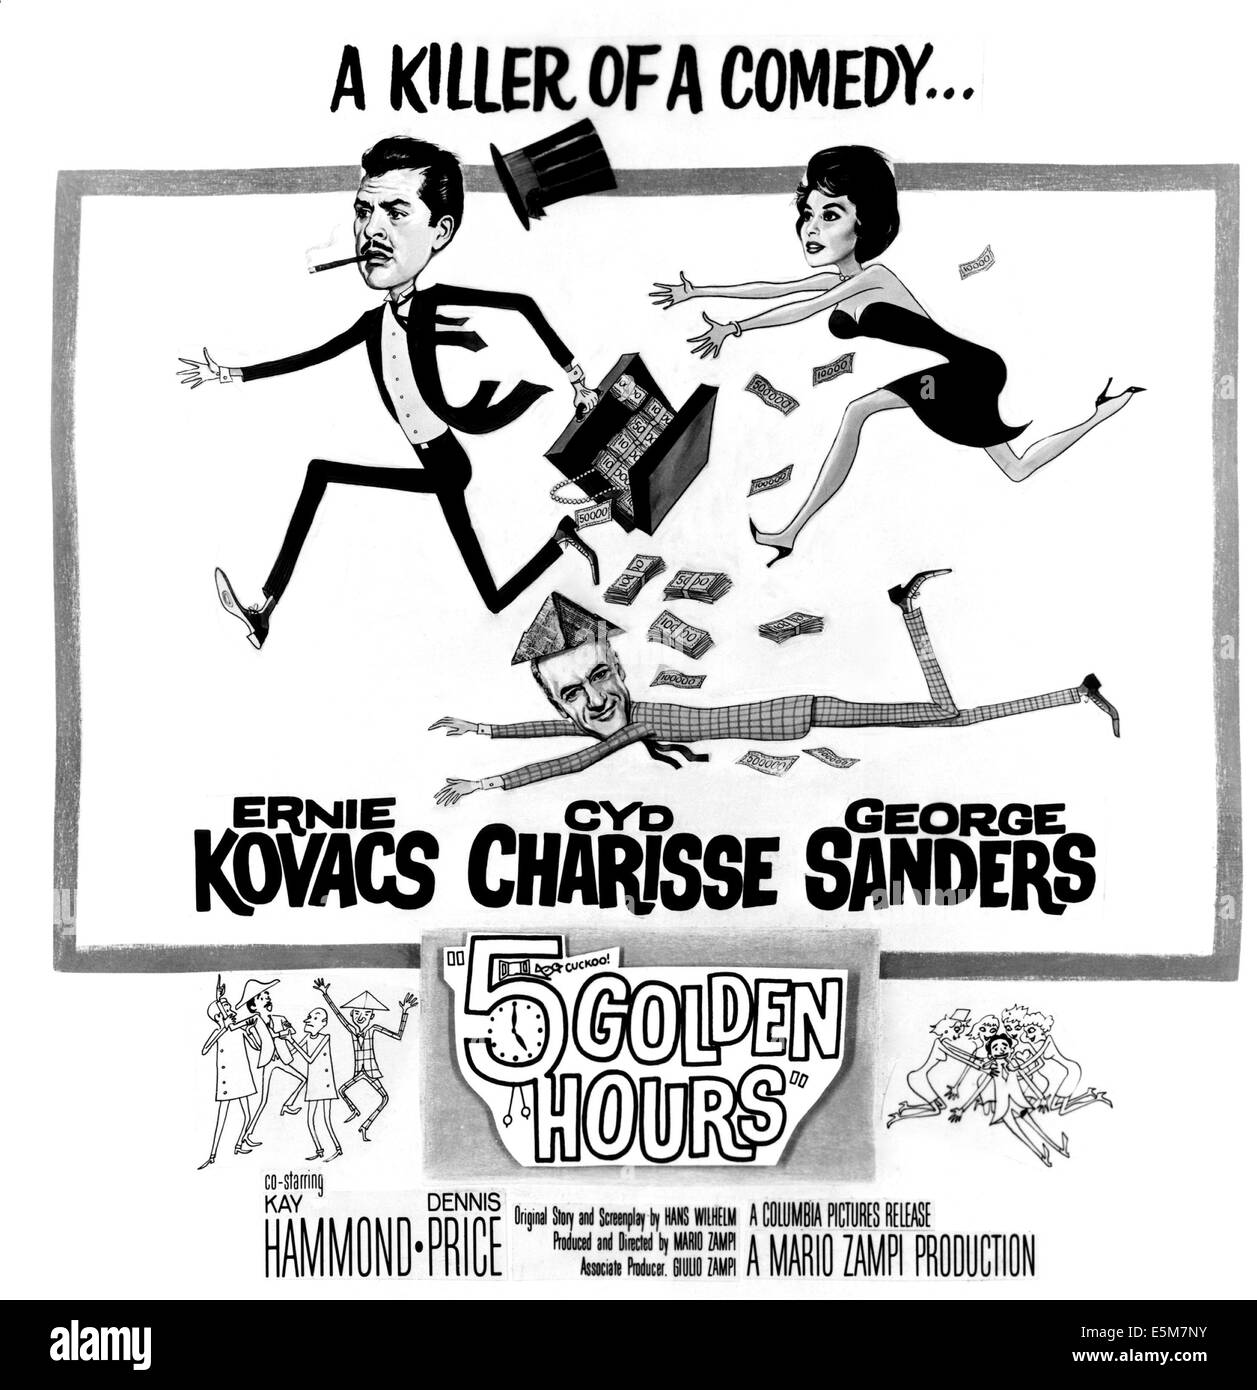 FIVE GOLDEN HOURS, Ernie Kovacs, Cyd Charisse, George Sanders, 1961 Stock Photo